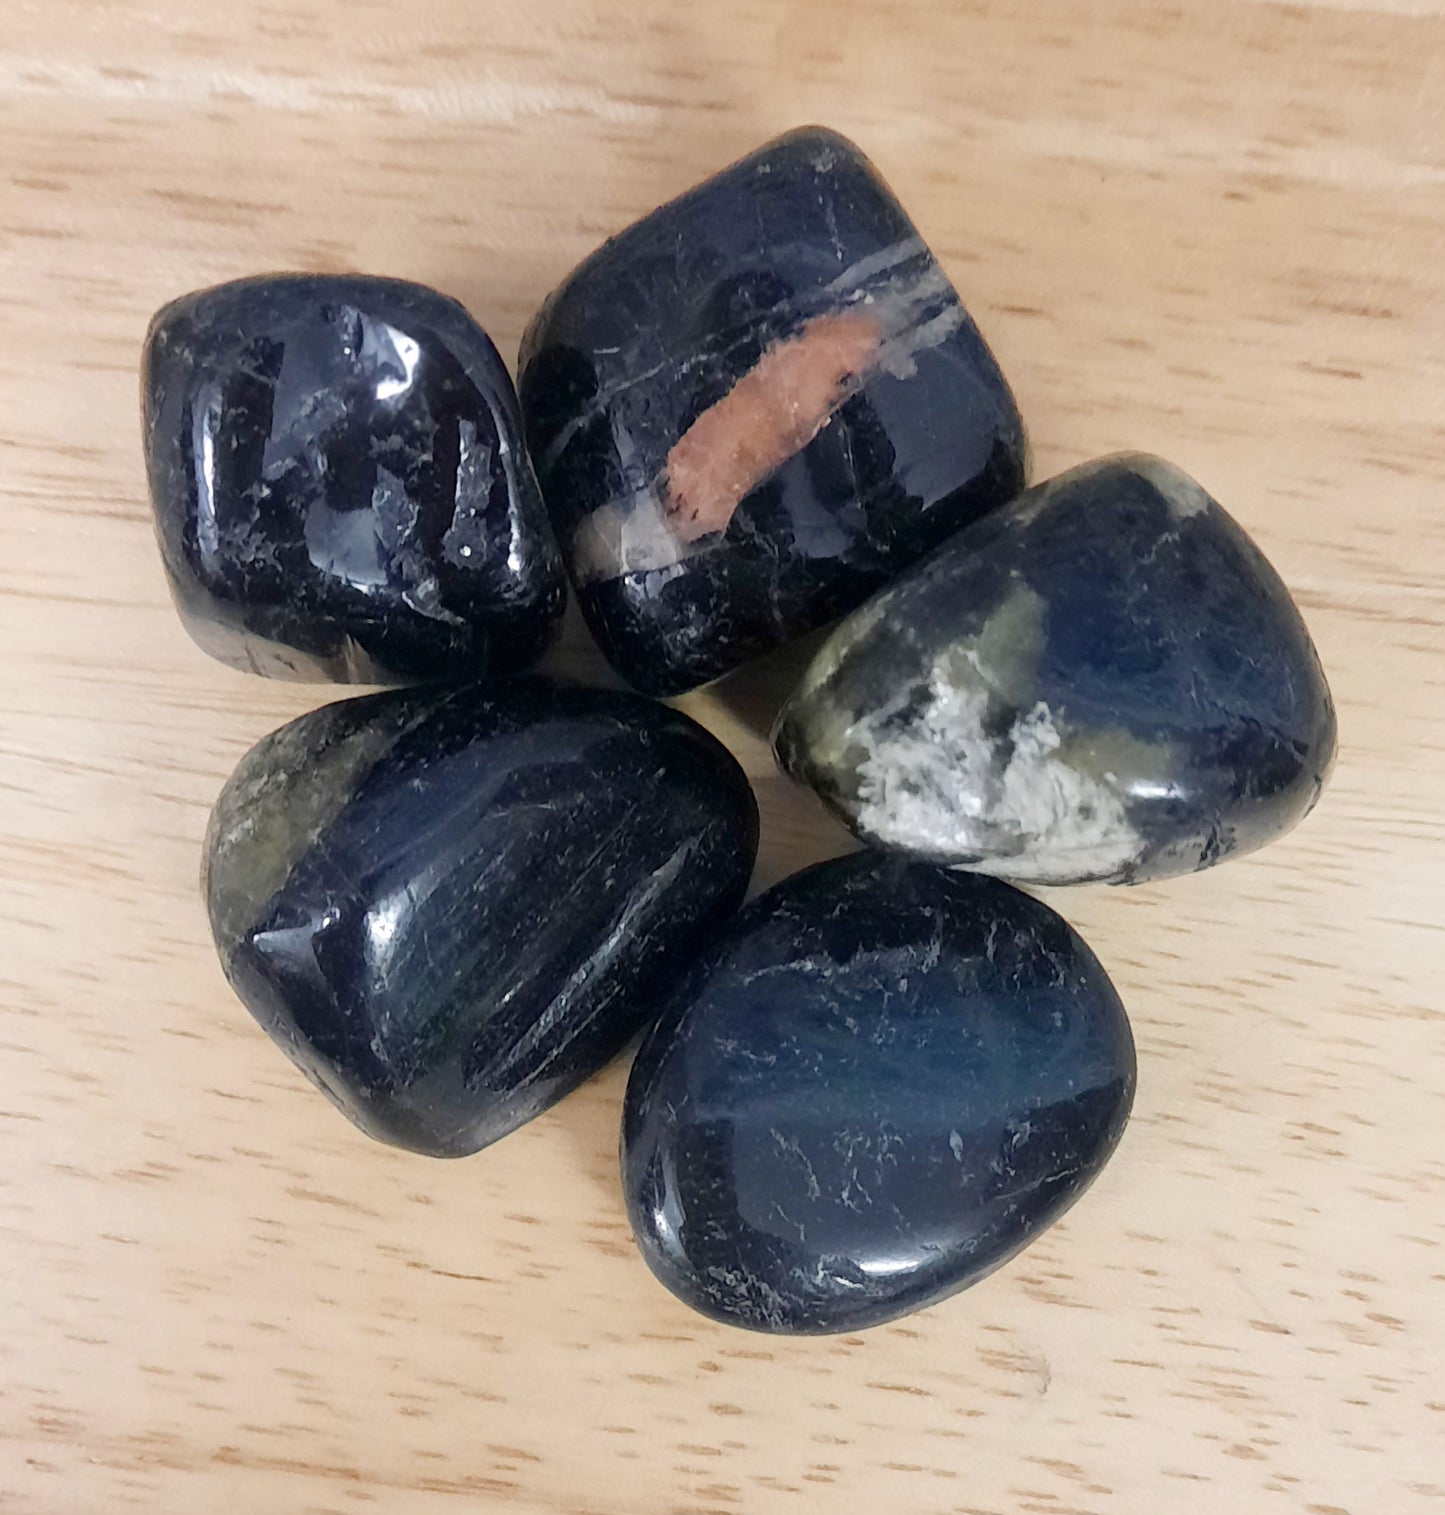 Black tourmaline polished tumblestones crystals